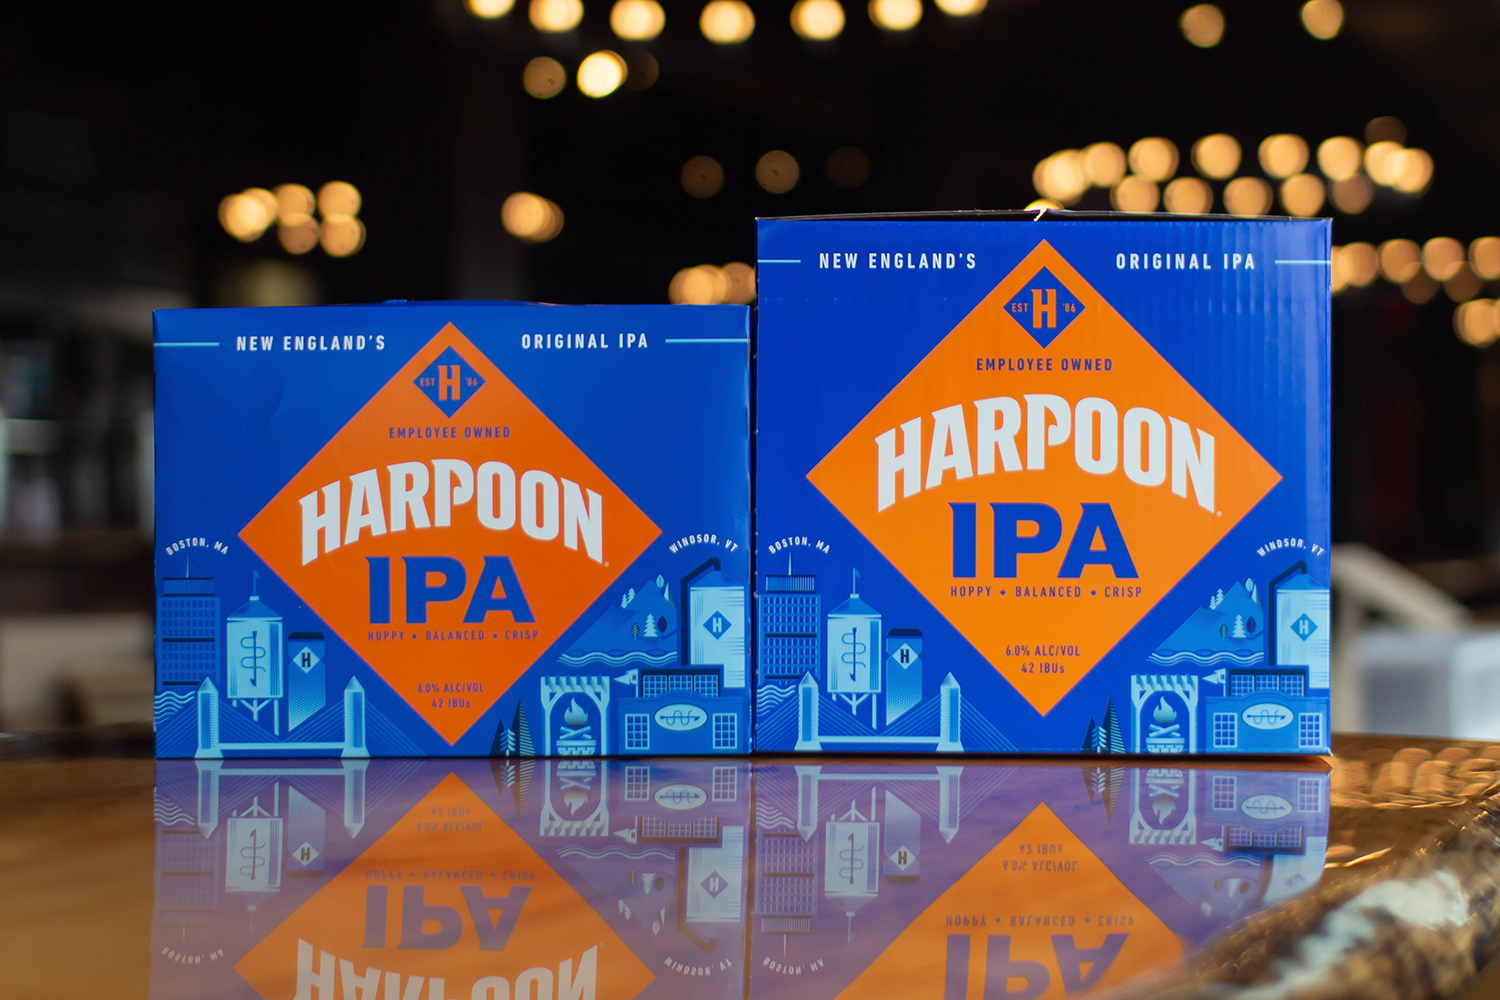 harpoon brewery stock